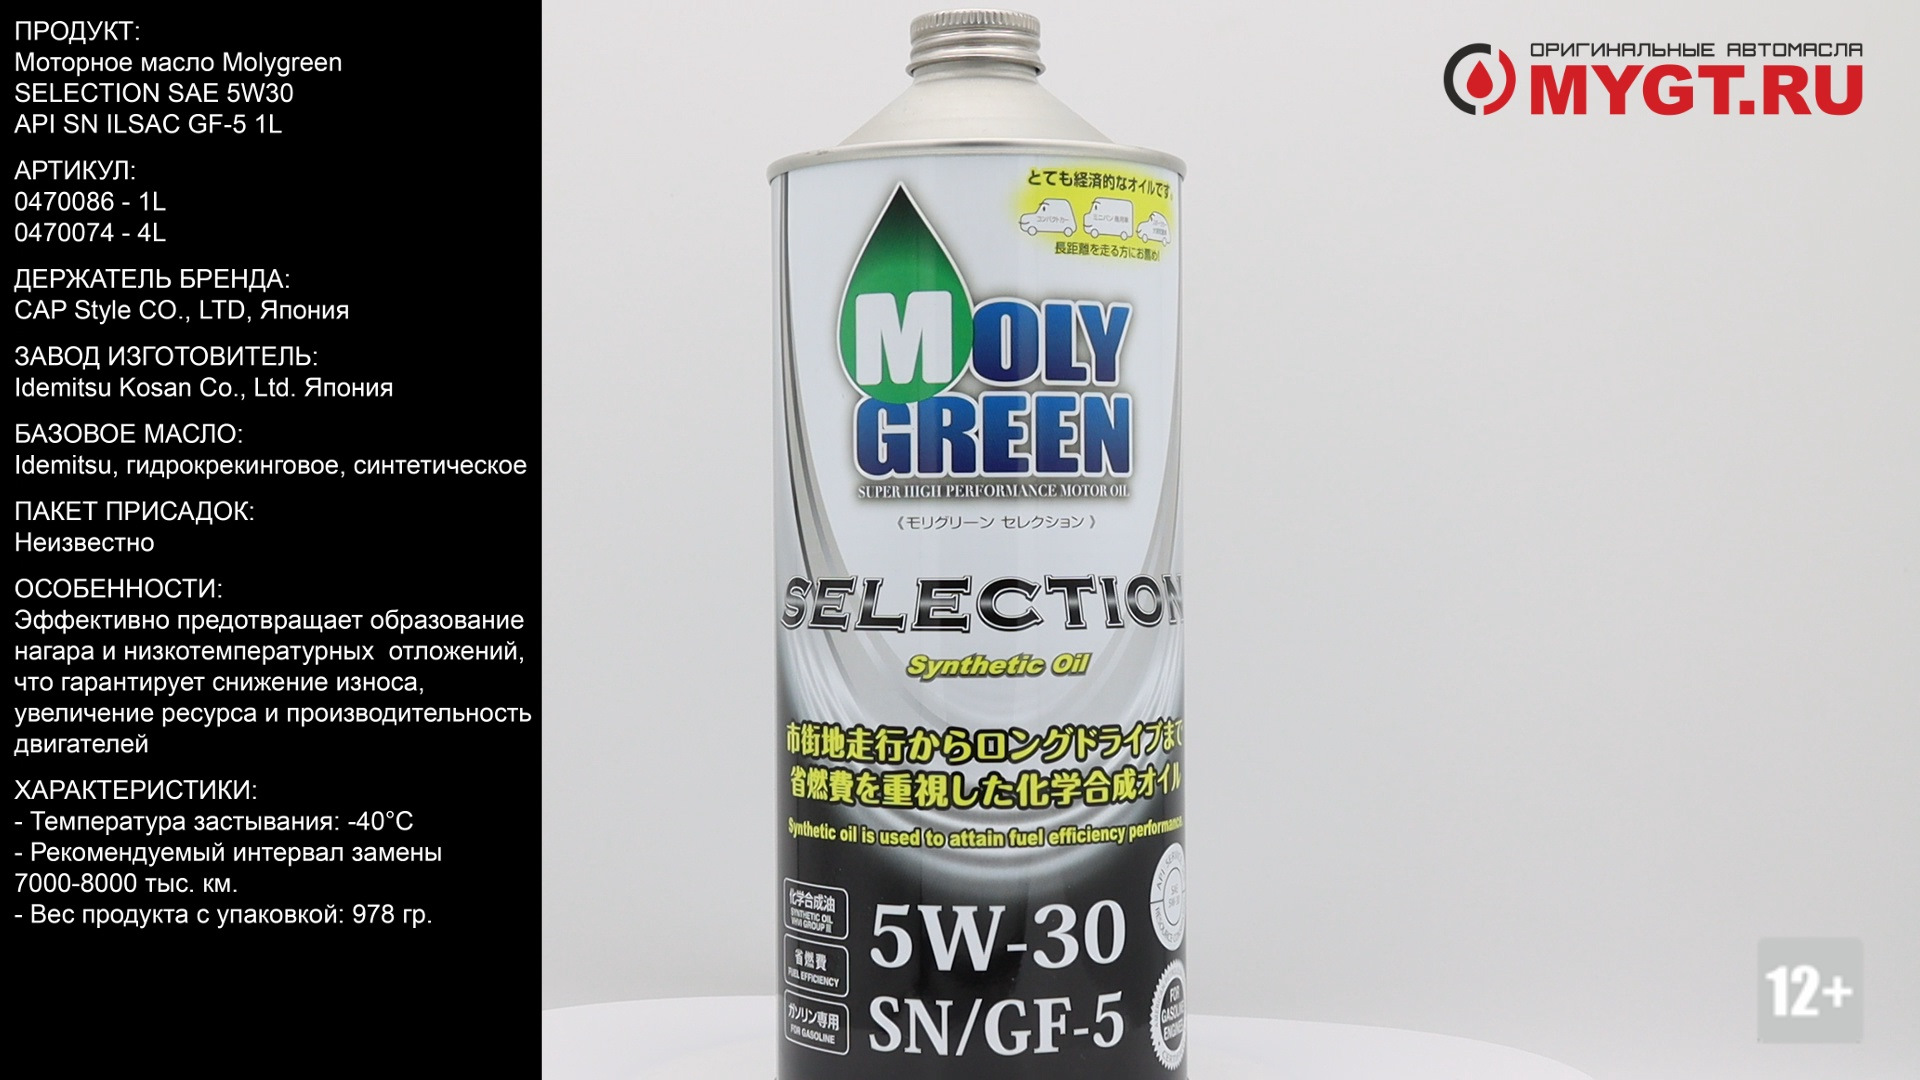 Moly green 5w40. Moly Green 5w30 selection. Масло Moly Green 5w30 selection. Moly Green selection 5w30 4л 0470074. Moly Green Premium Black SAE 5w-30 API SN ILSAC gf-5 4l 0470022.